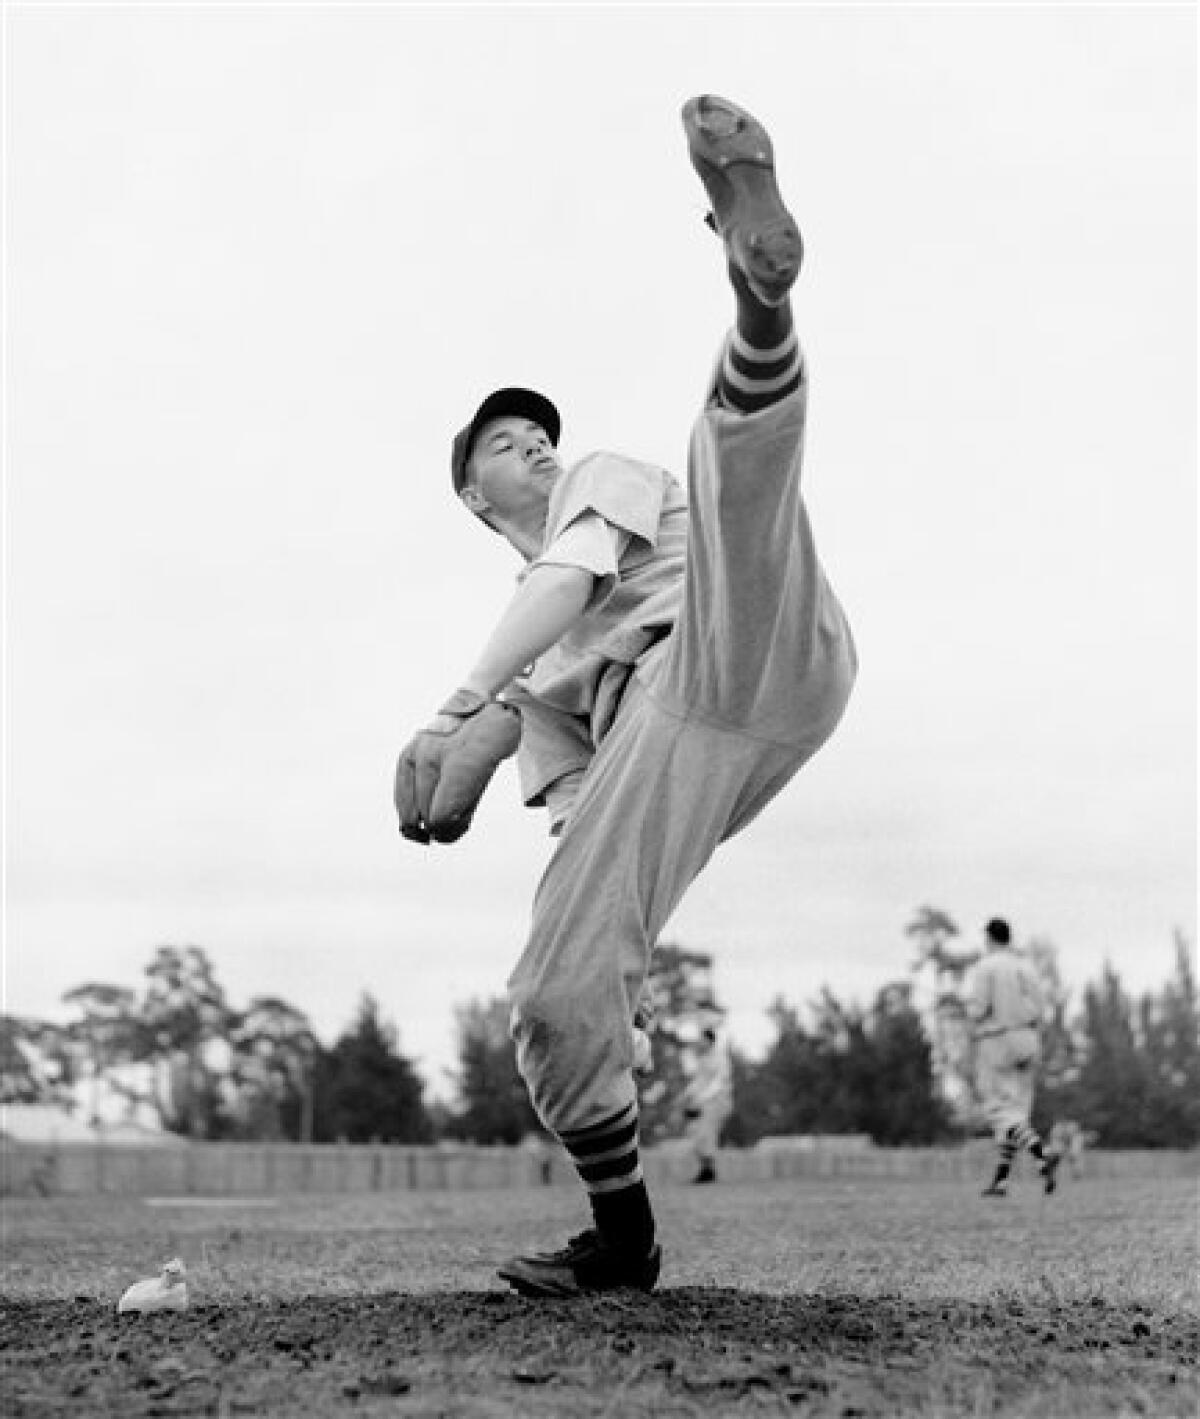 Bob Lemon 1948 Cleveland Indians Cooperstown Throwback MLB Jersey